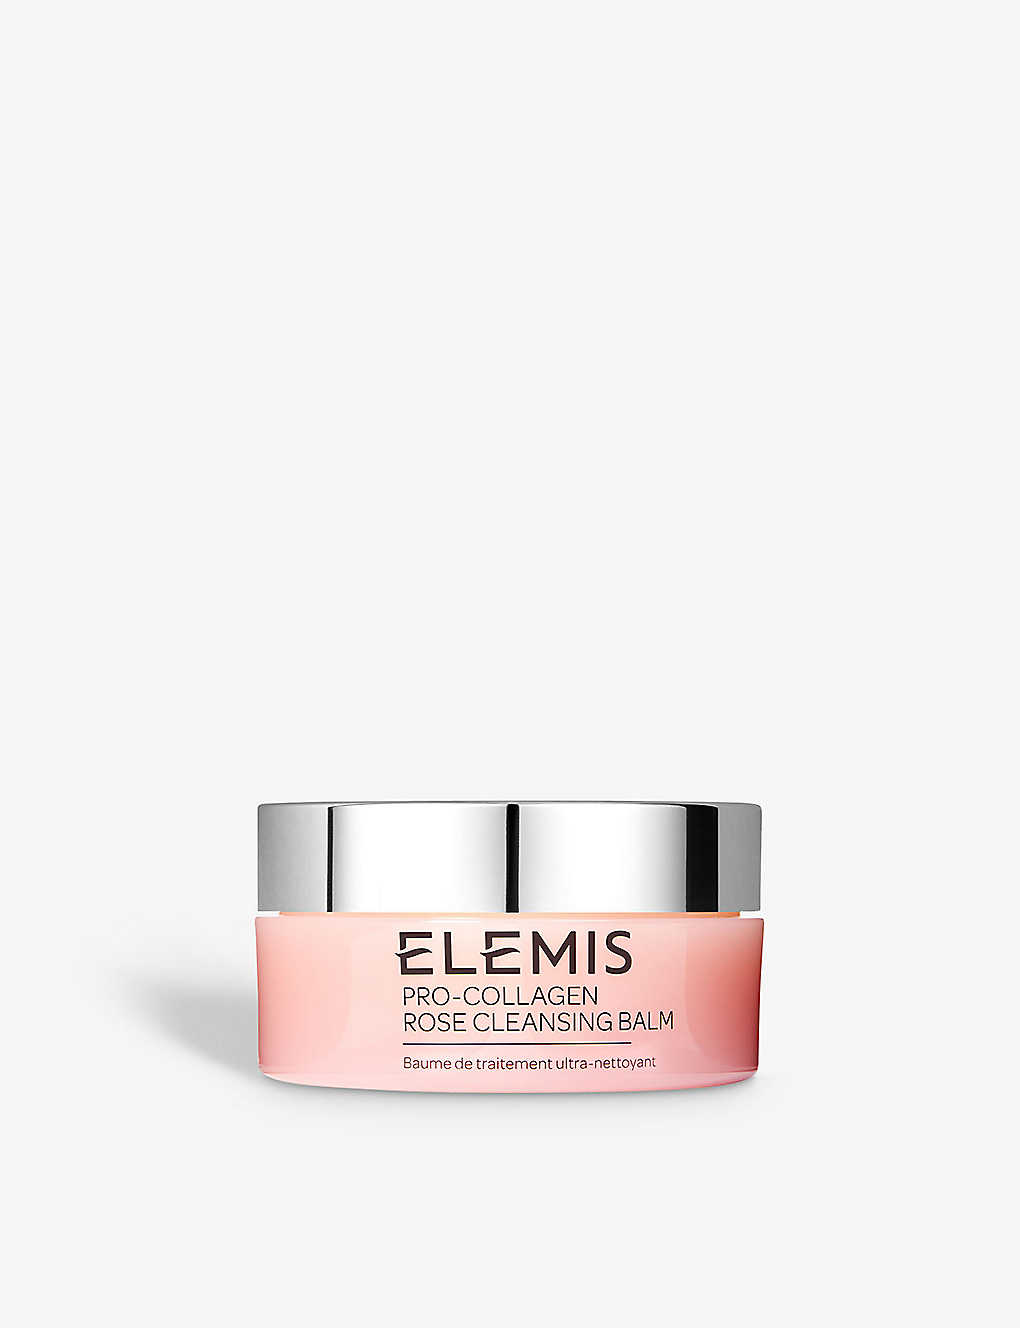 Elemis Pro-collagen Rose Cleansing Balm 100g